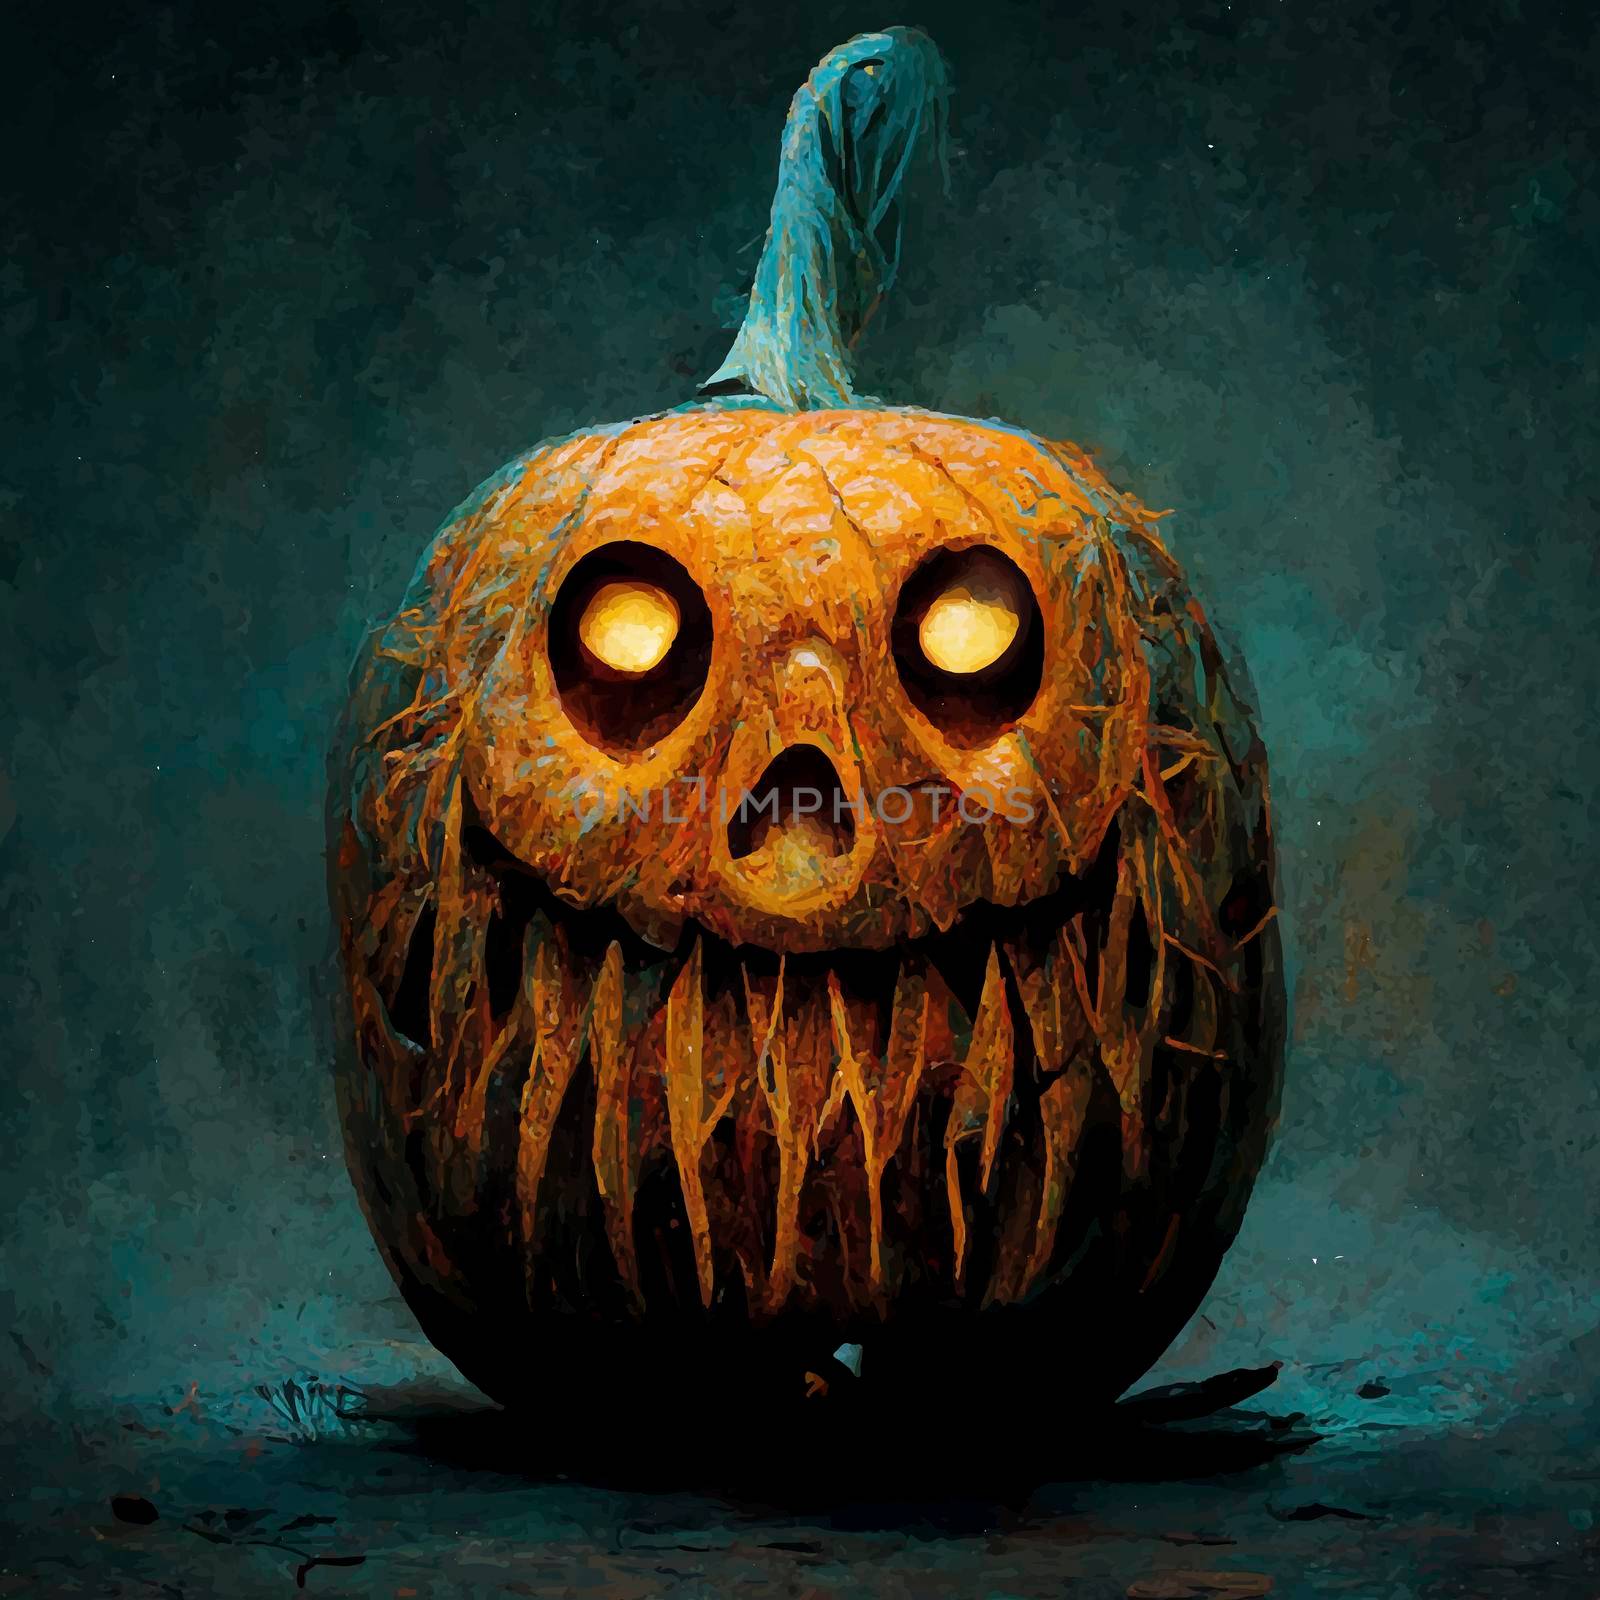 evil pumpkin realistic illustration. halloween themed illustration. by JpRamos